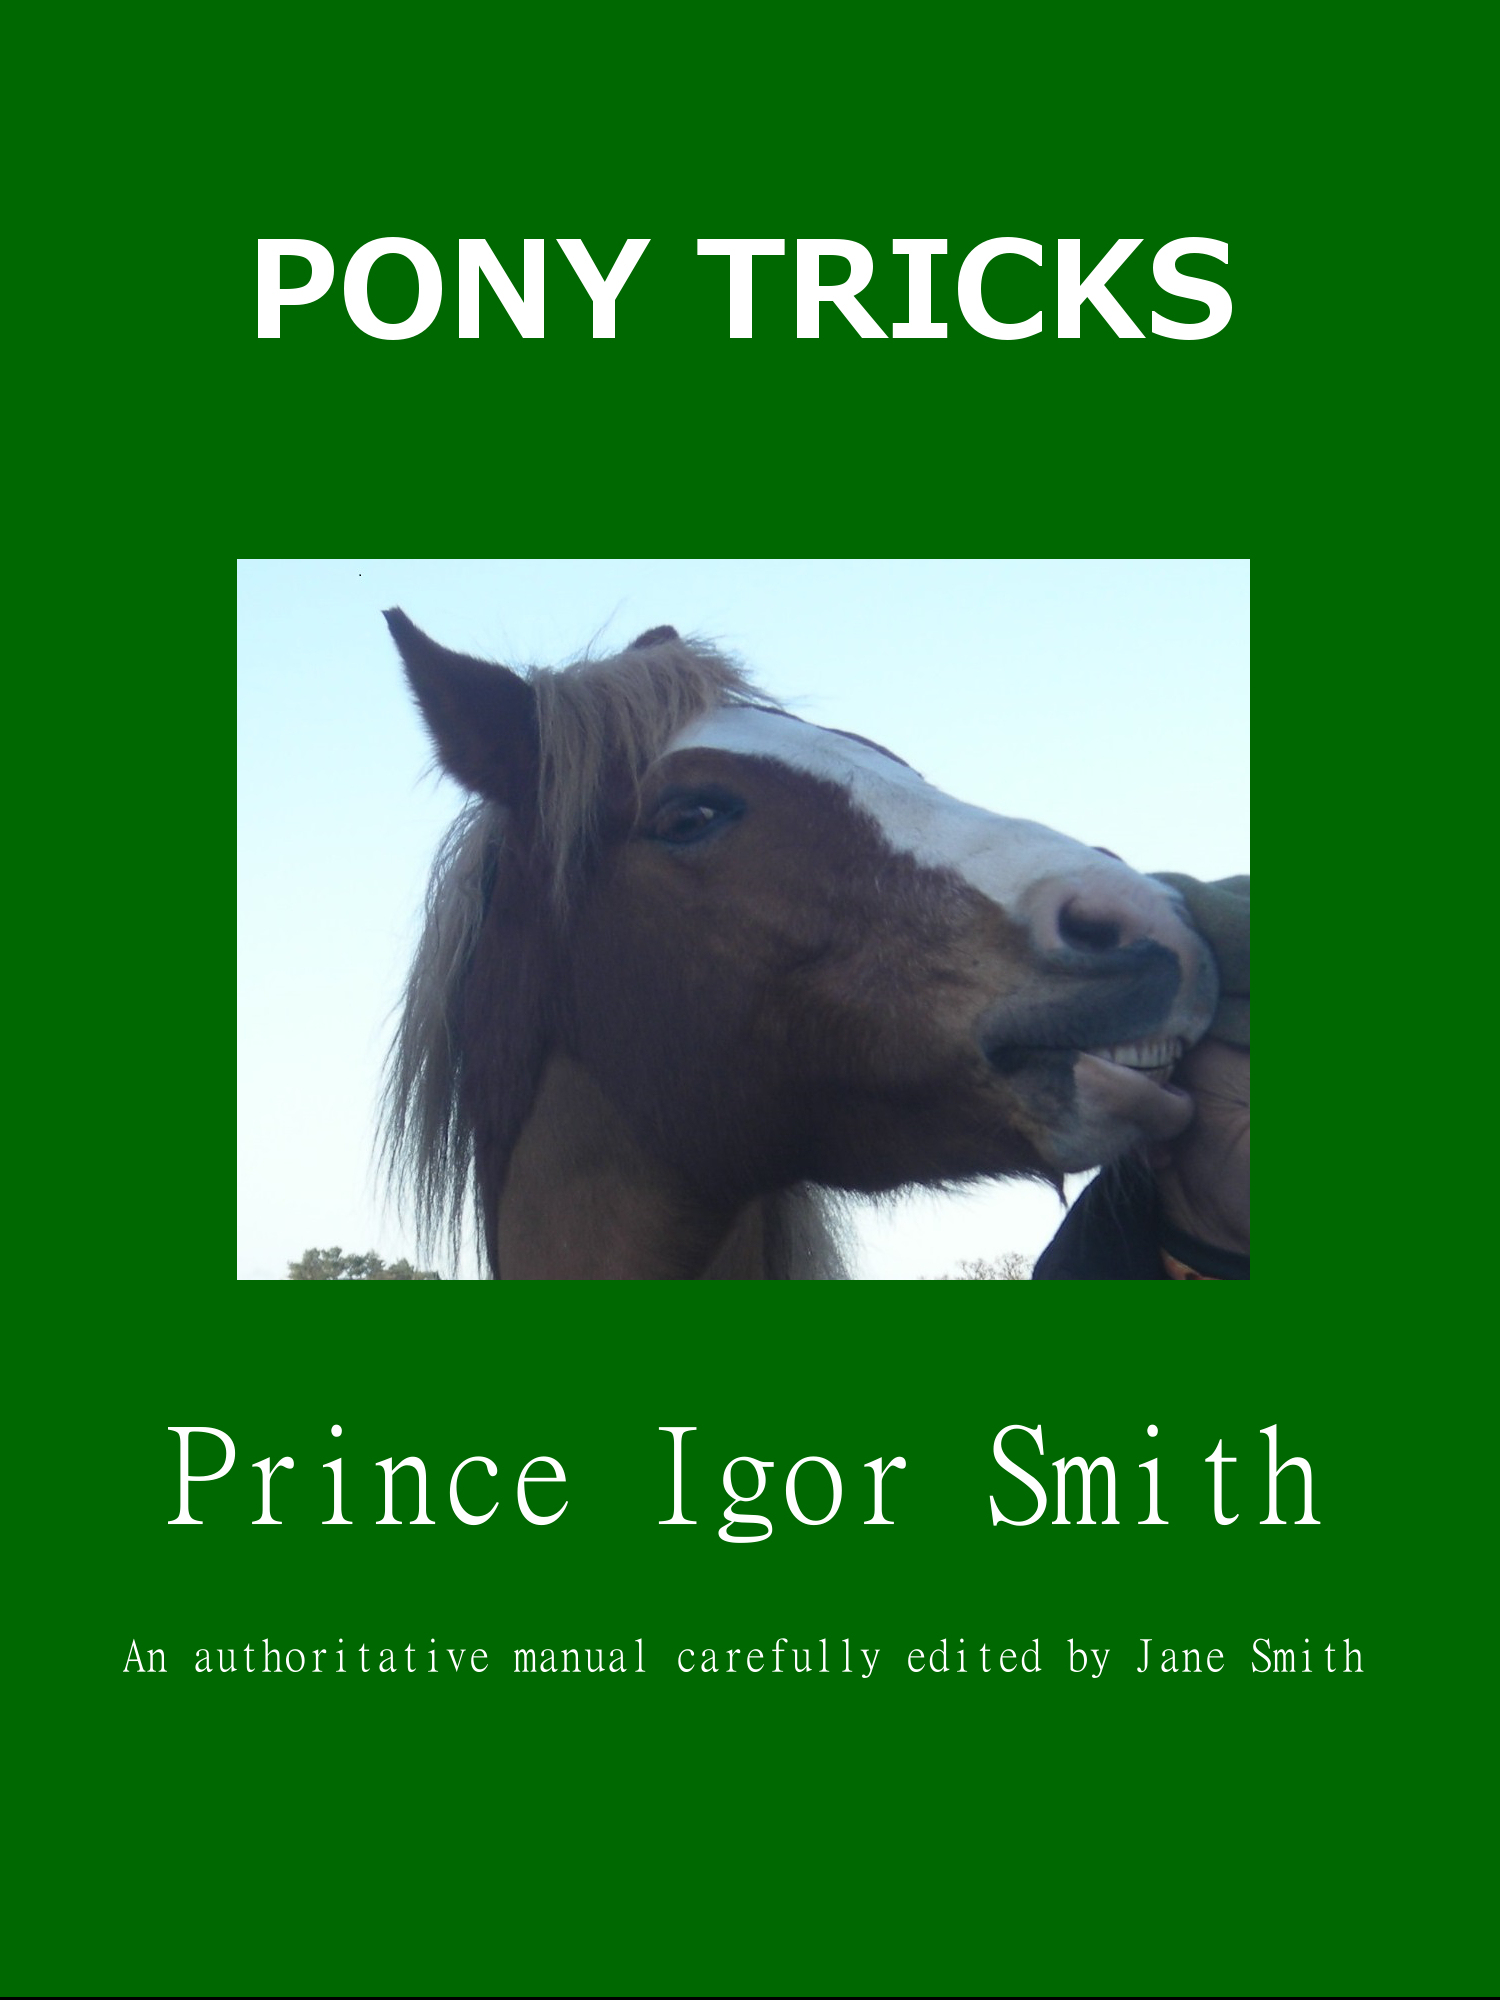 Pony Tricks cover